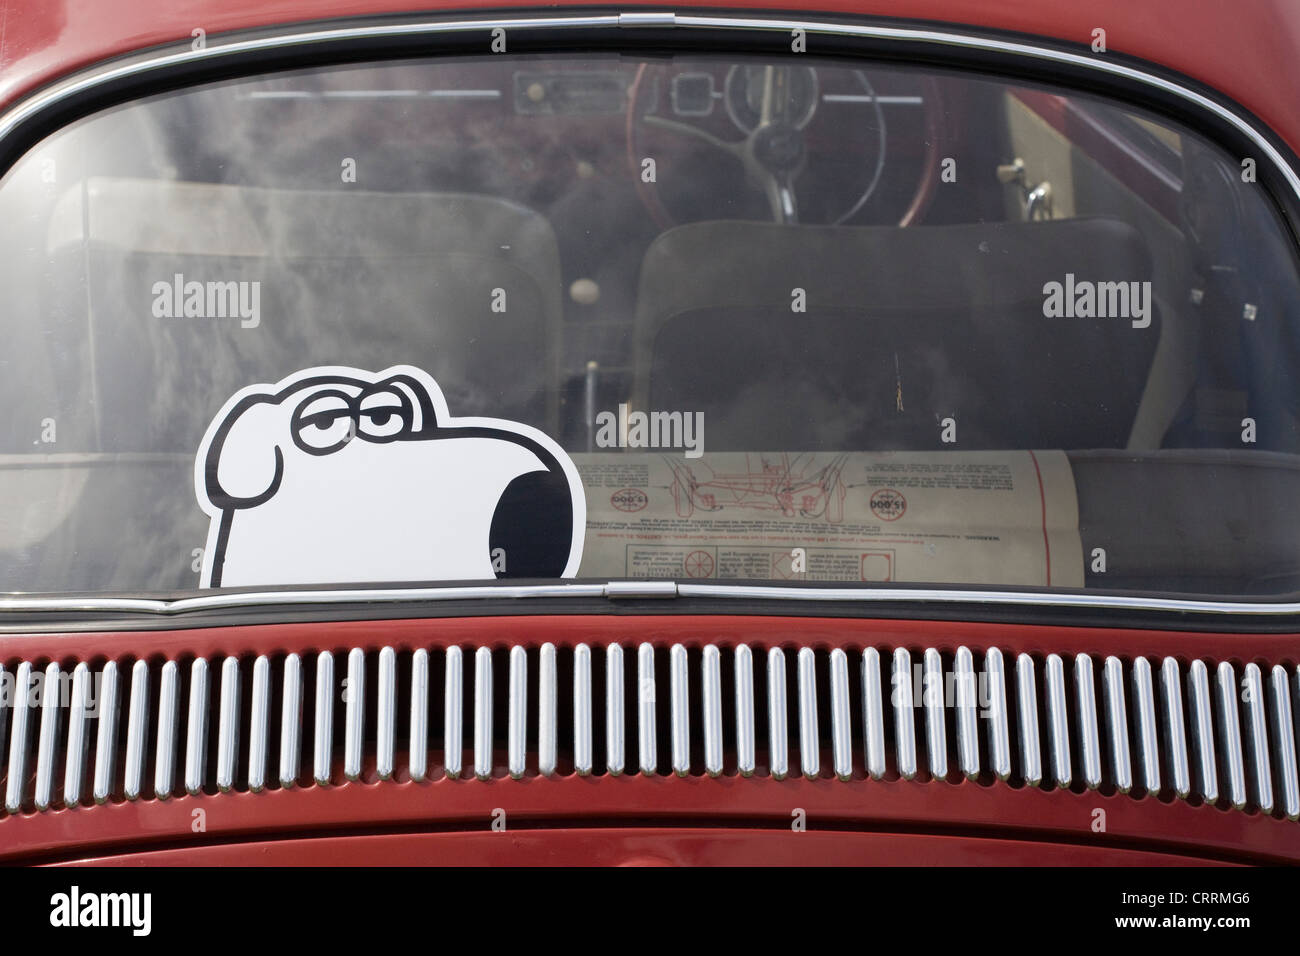 Manche Führen, Manche Folgen. Sticker or decal on car rear window Stock  Photo - Alamy